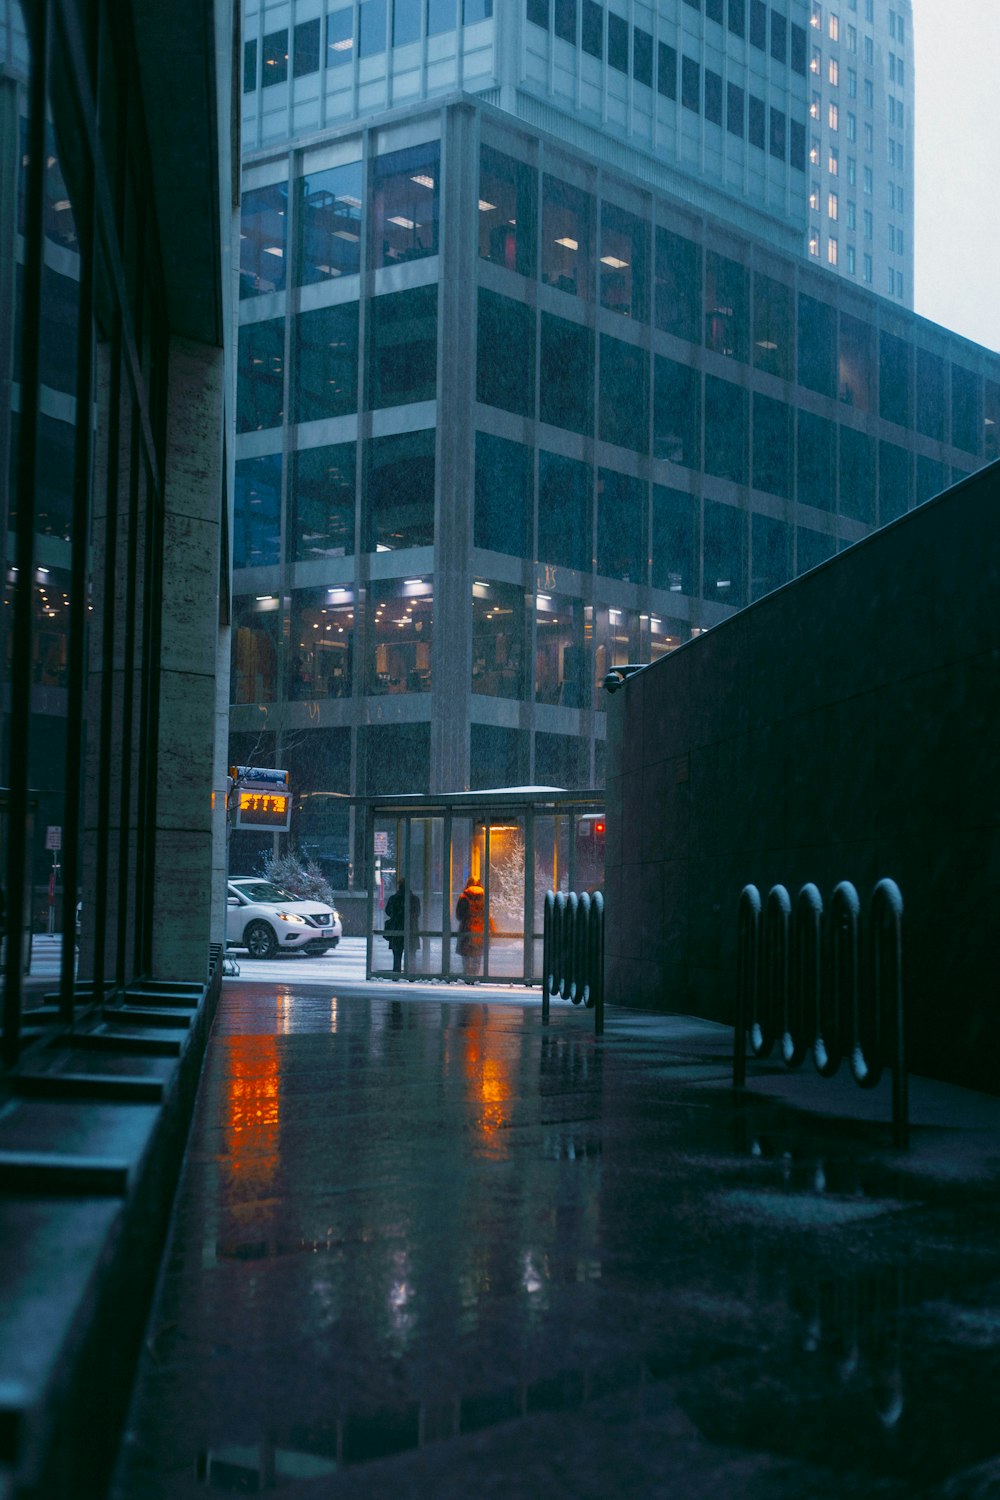 a person walking down a sidewalk in the rain